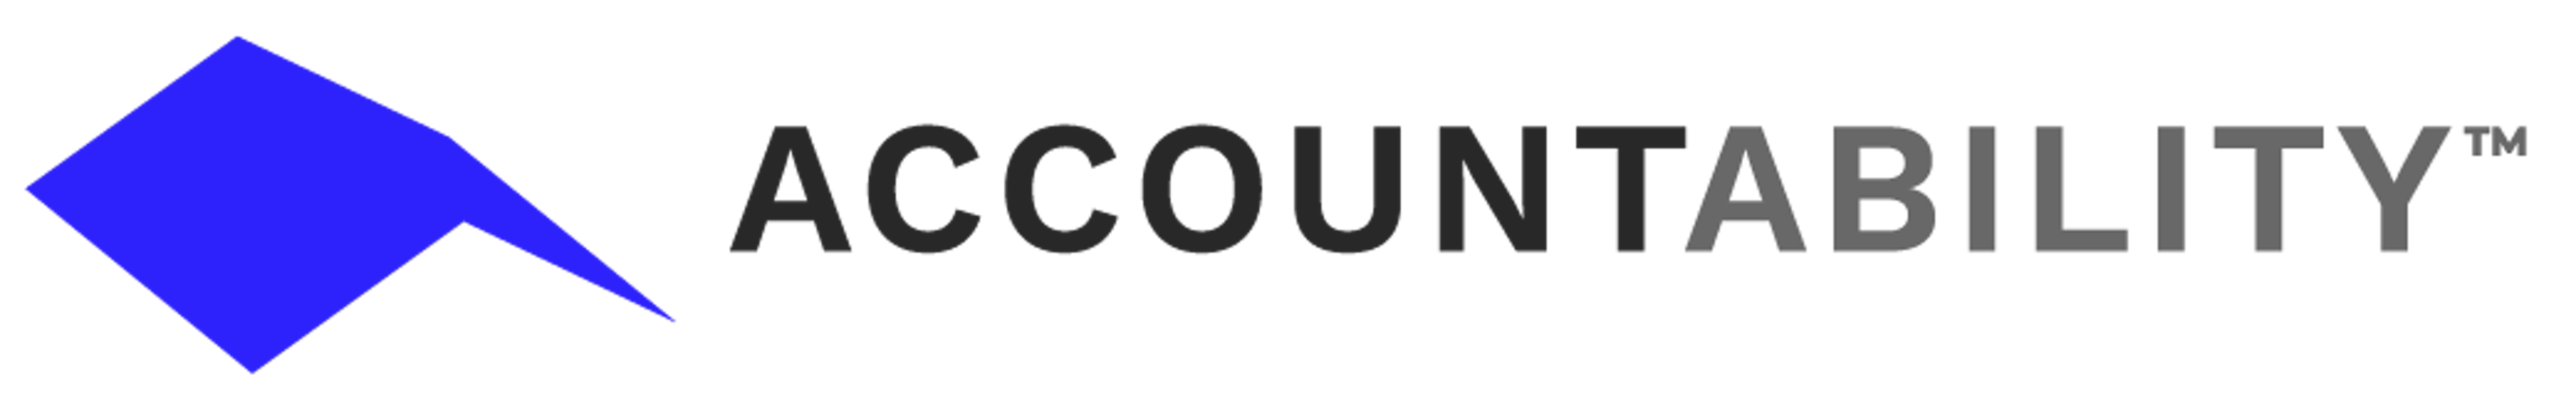 Accountability Logo